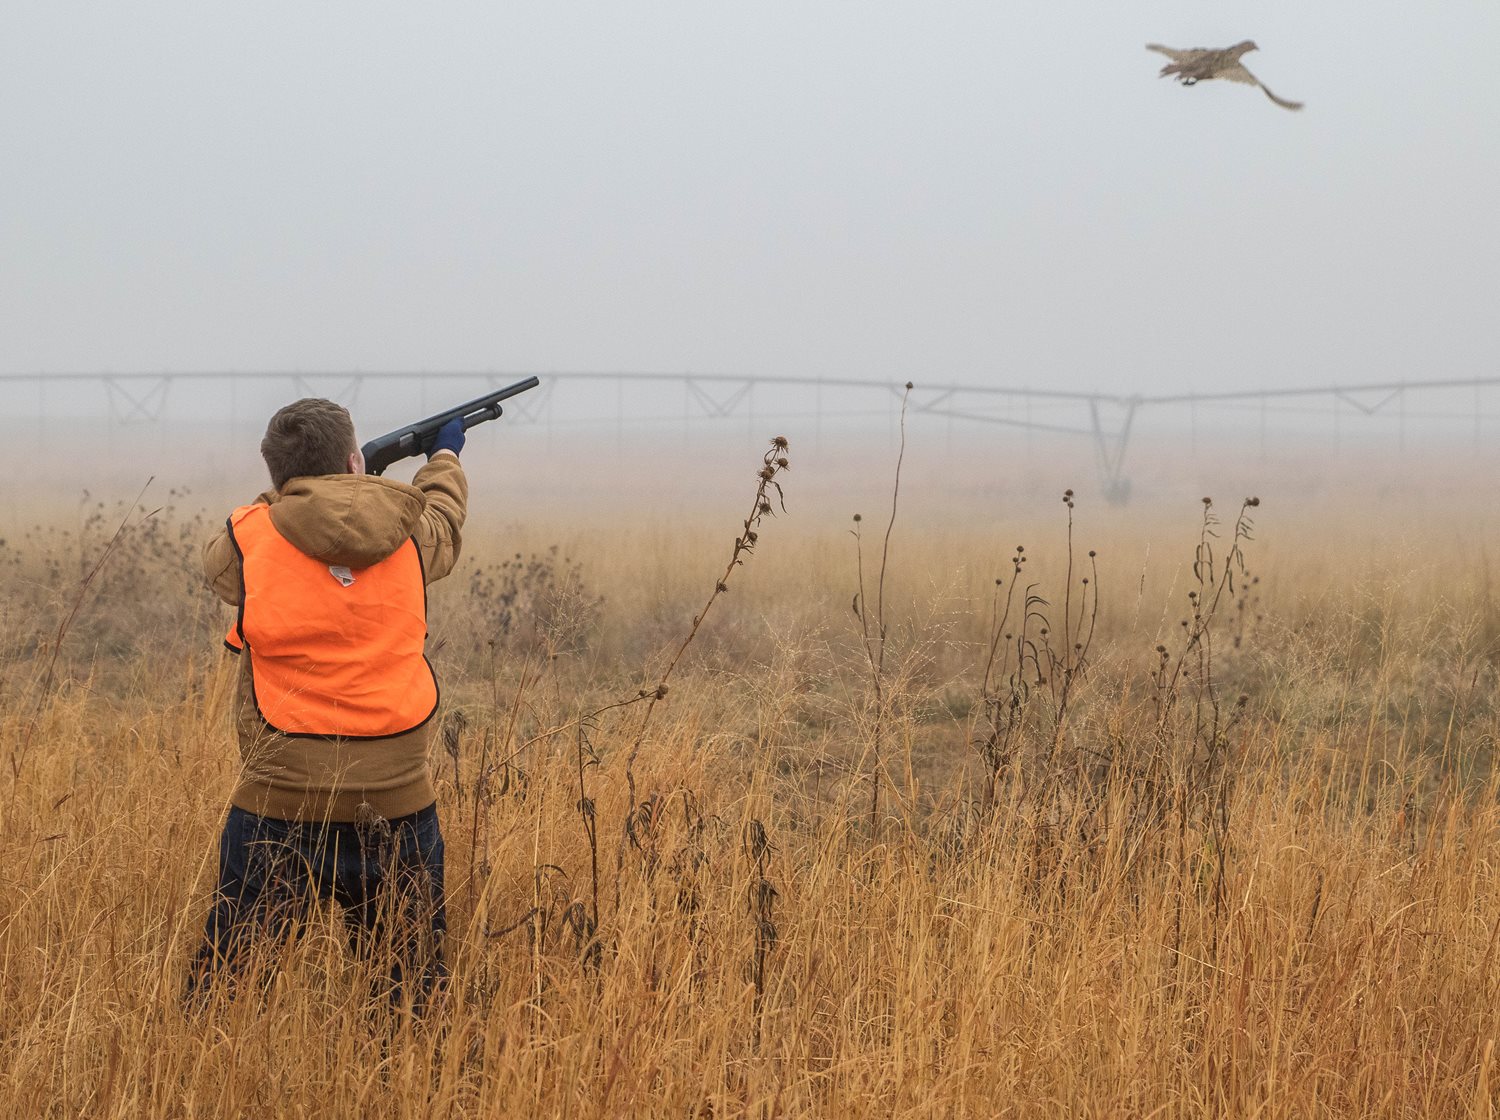 Downar Bird Farm has ~17K birds available for pheasant hunting season in southeast Wyoming